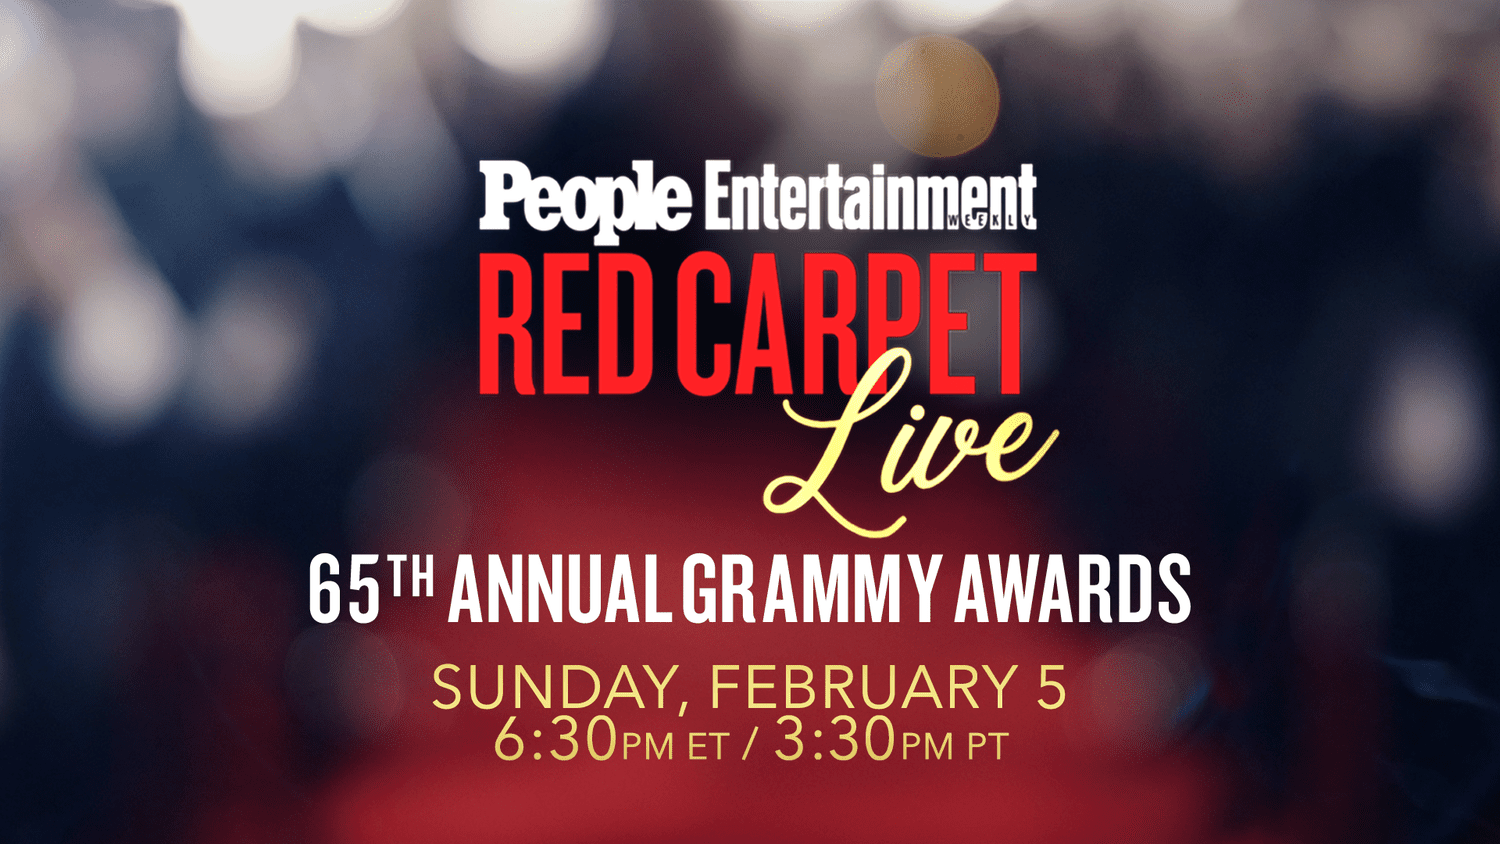 Grammy Awards 2023: Red Carpet Live